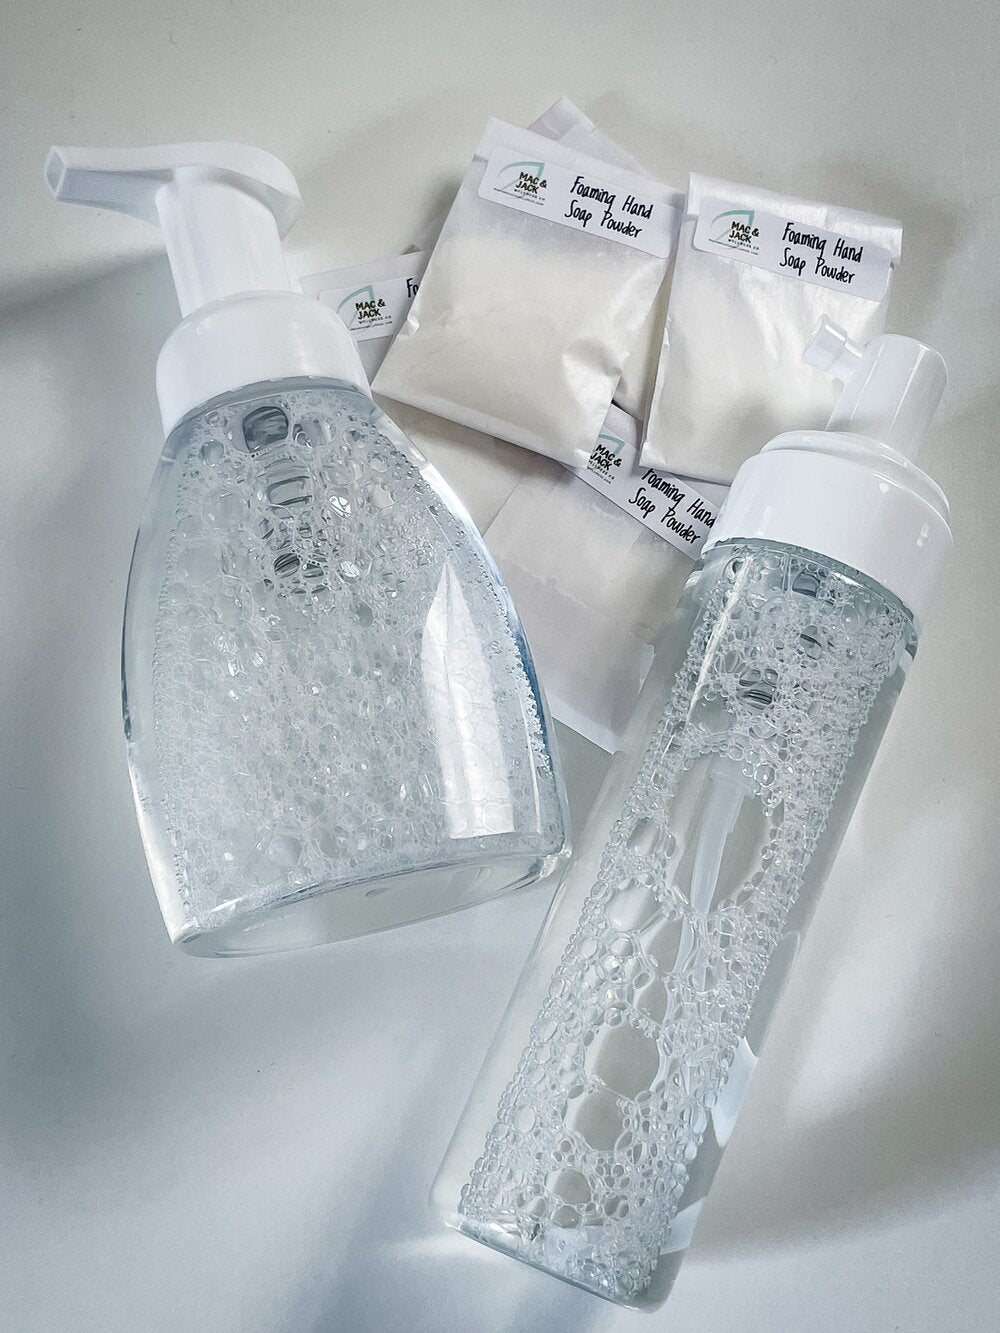 Powdered Foaming hand soap starter pack